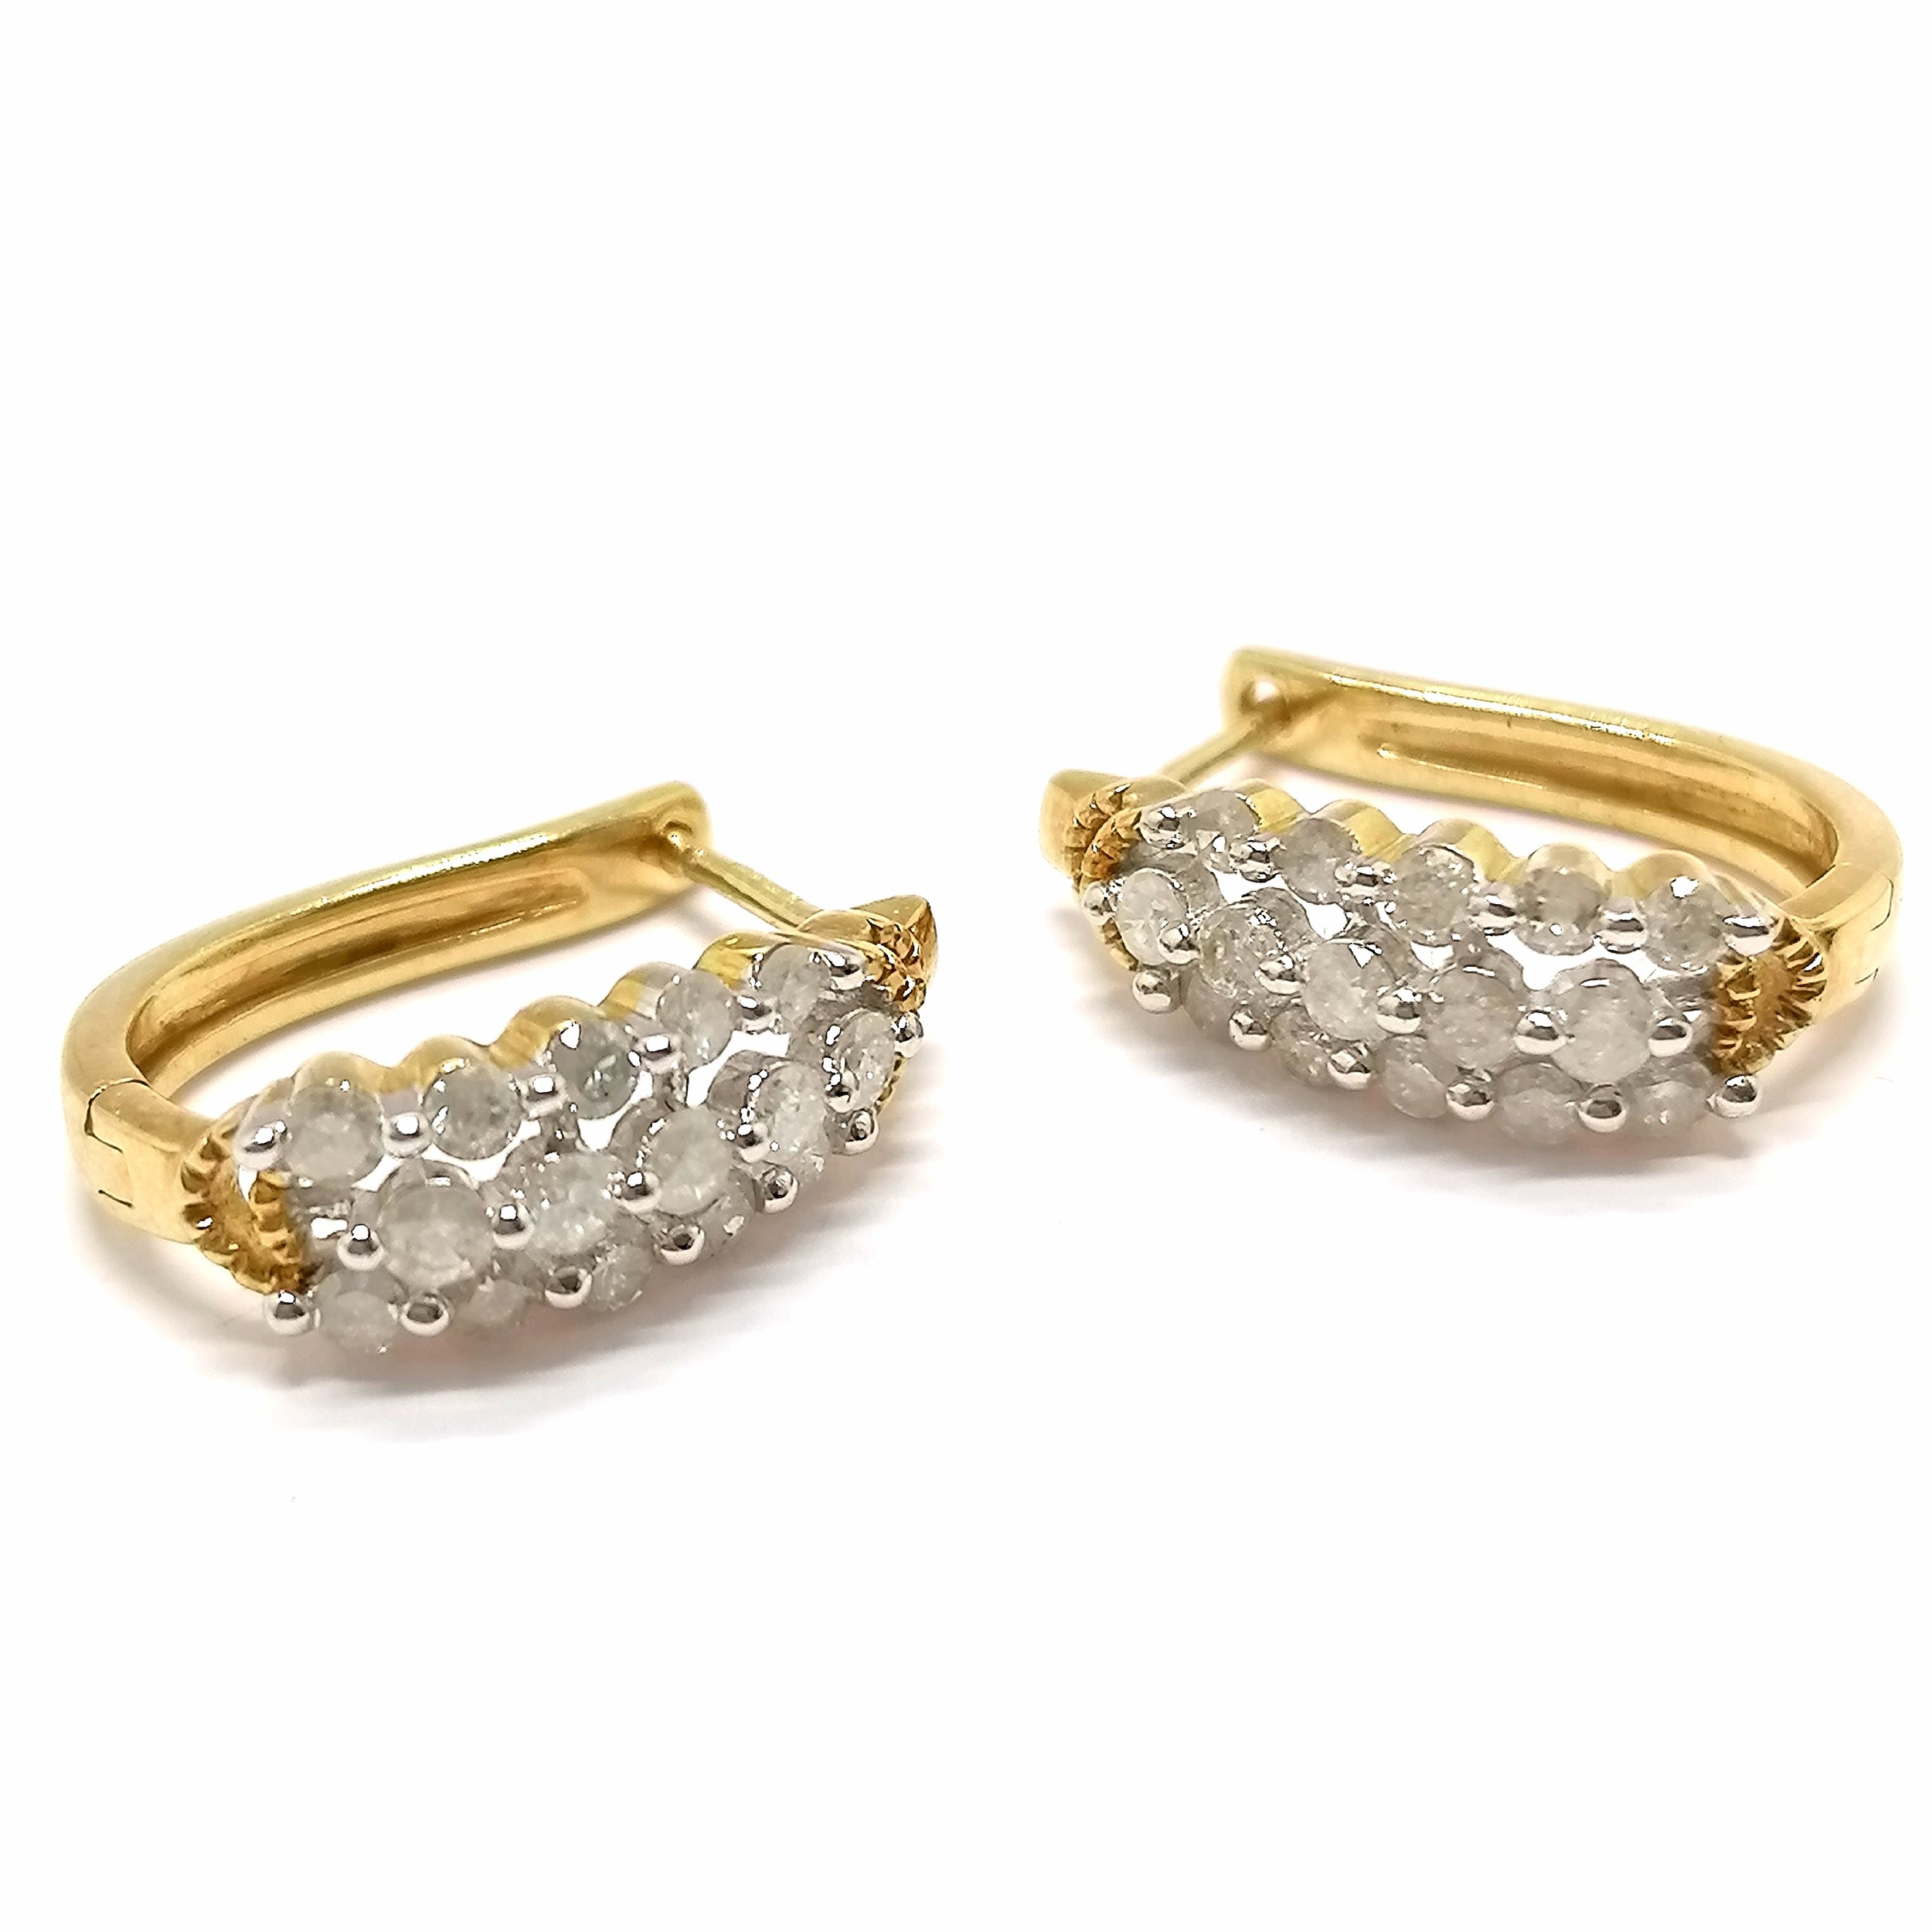 Pair of 9ct hallmarked gold diamond set hoop earrings - 1.8cm drop & 4.2g total weight